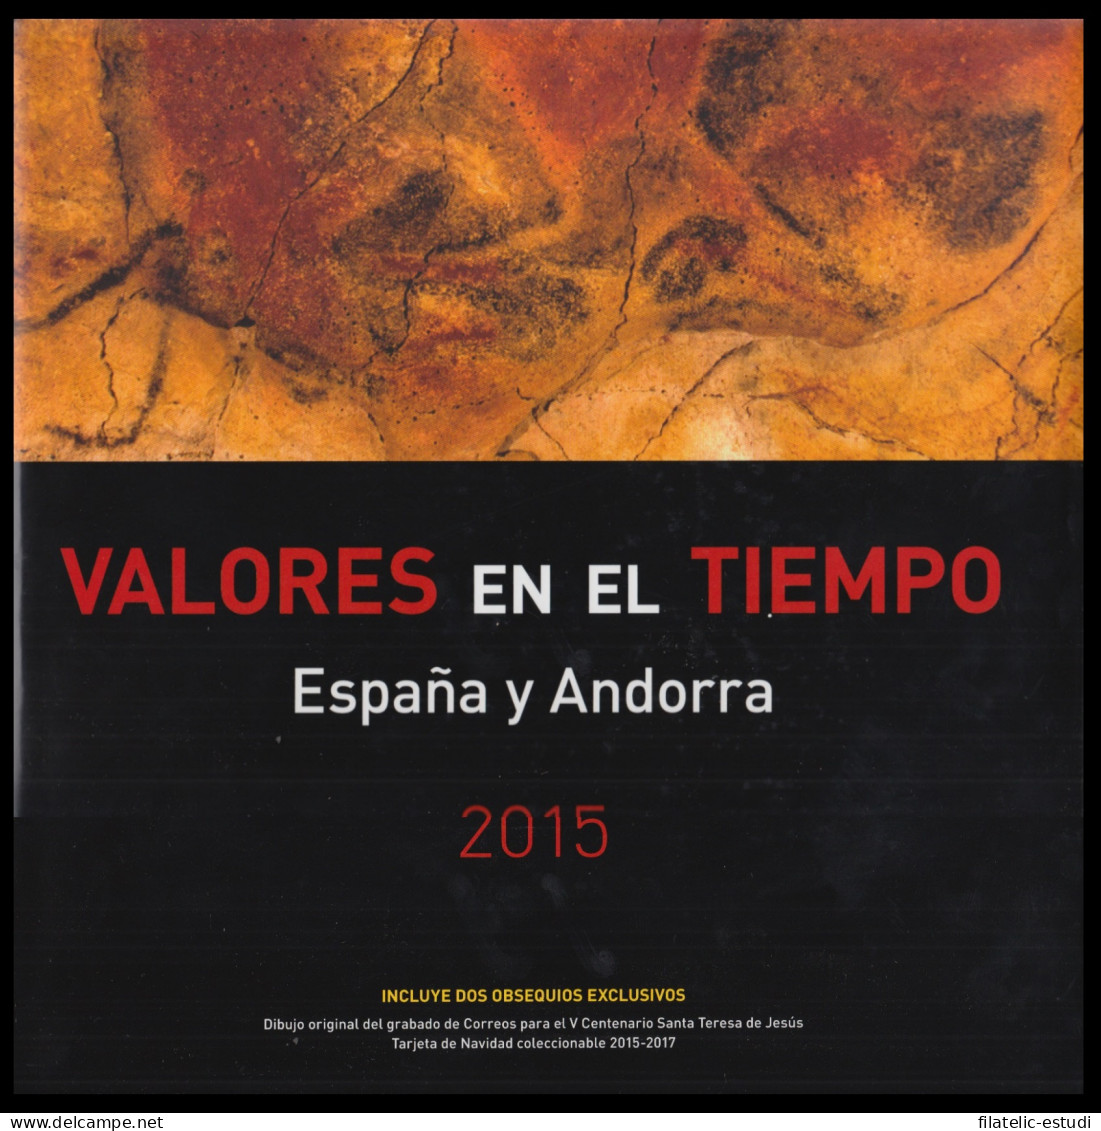 Libro Album Oficial De Sellos España Y Andorra  2015 - Republikanische Ausgaben